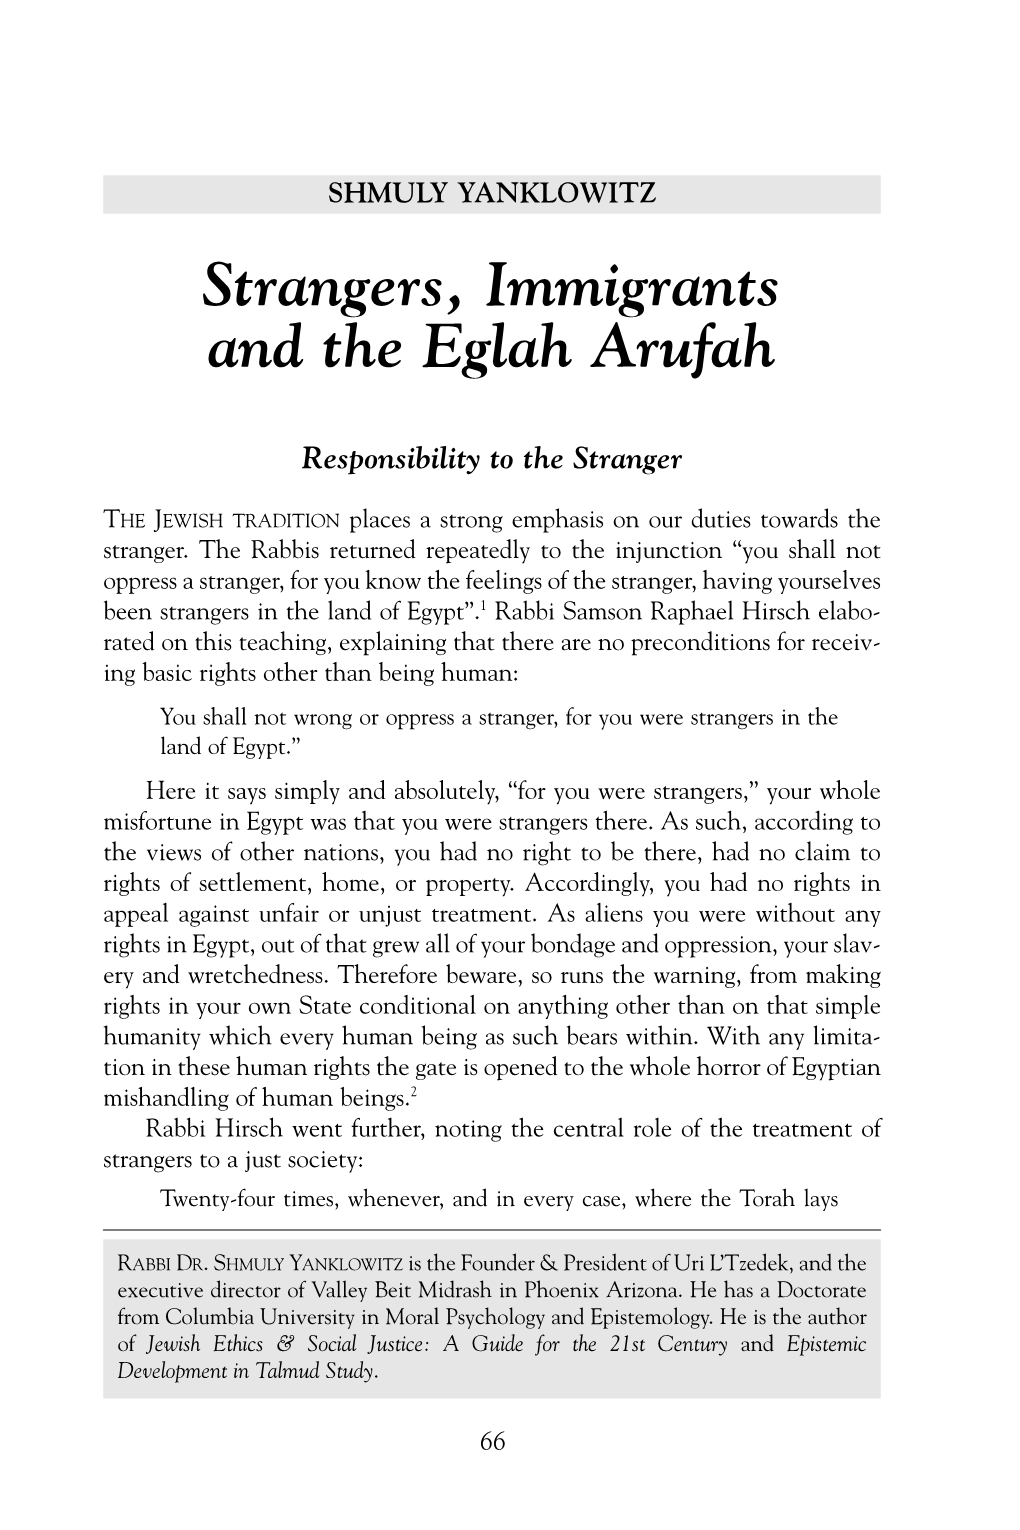 Strangers, Immigrants and the Eglah Arufah